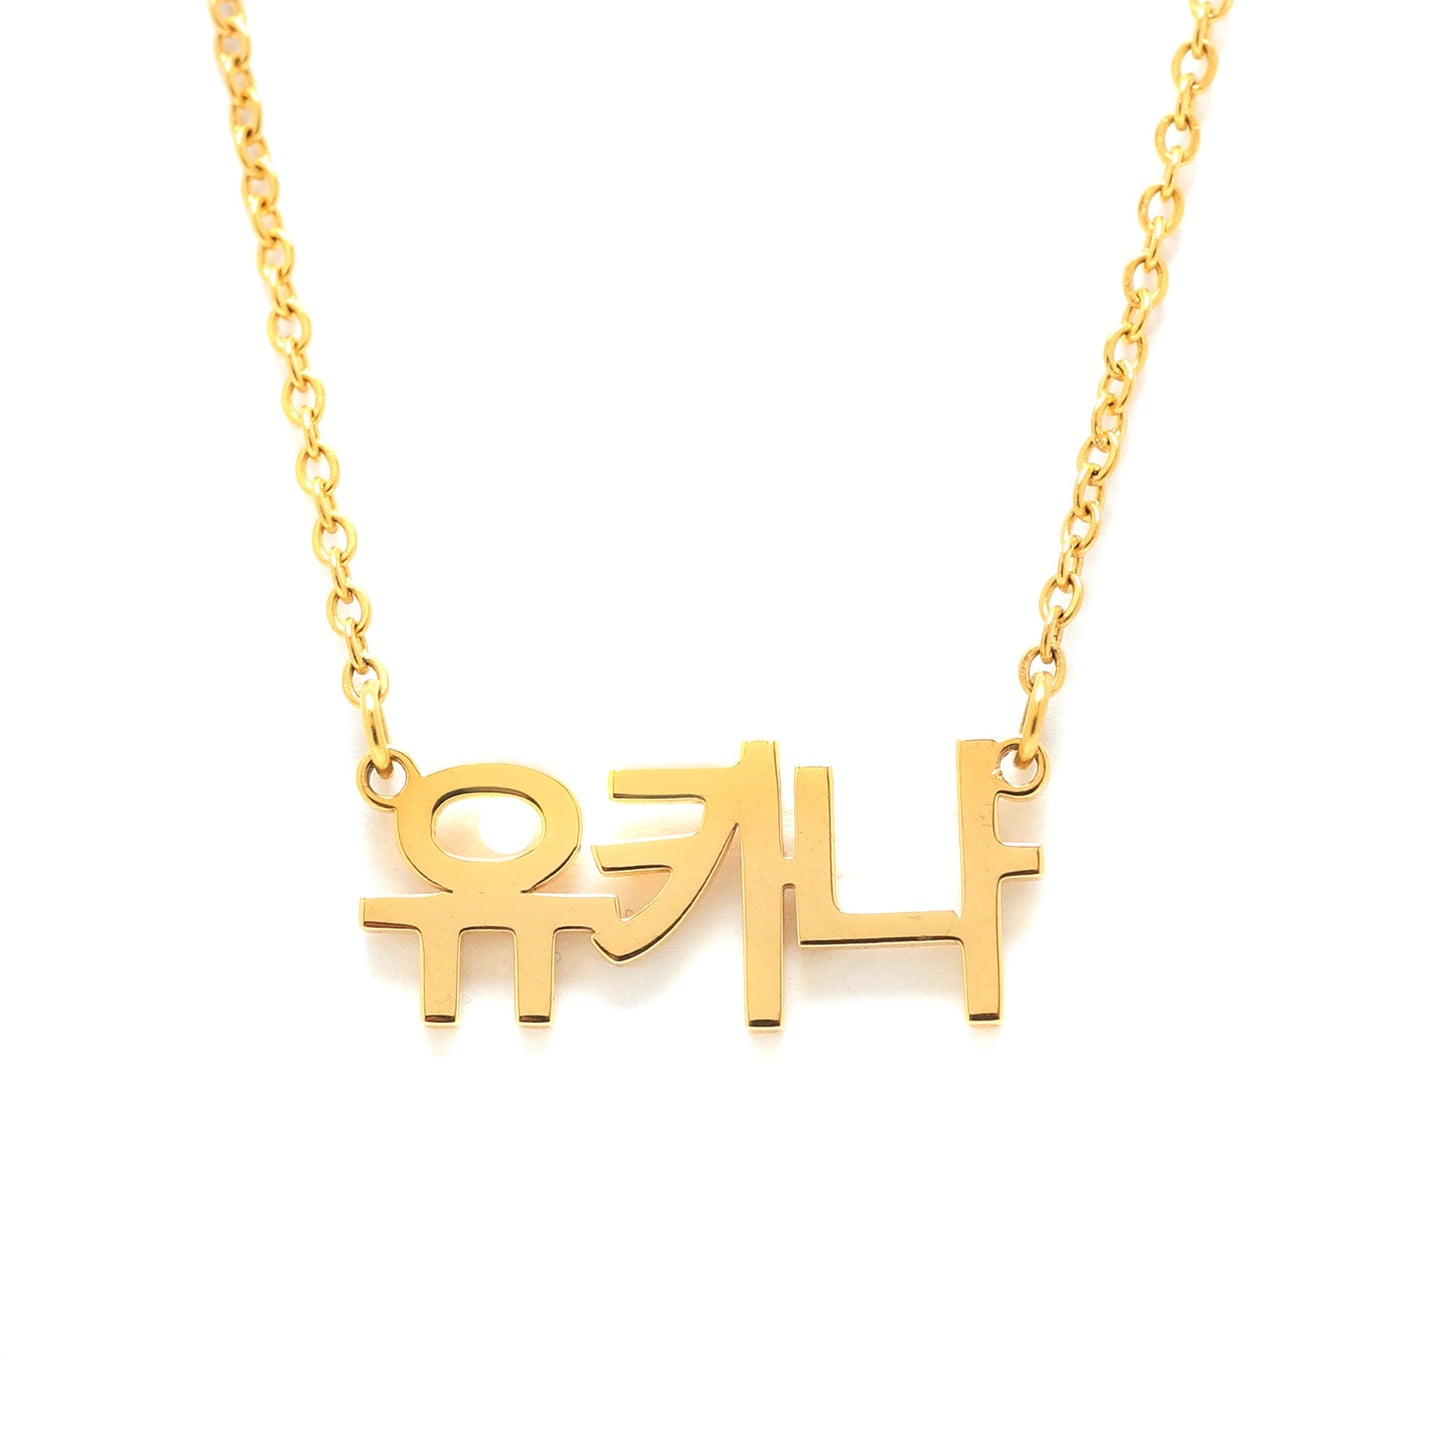 Name necklace Hangul script